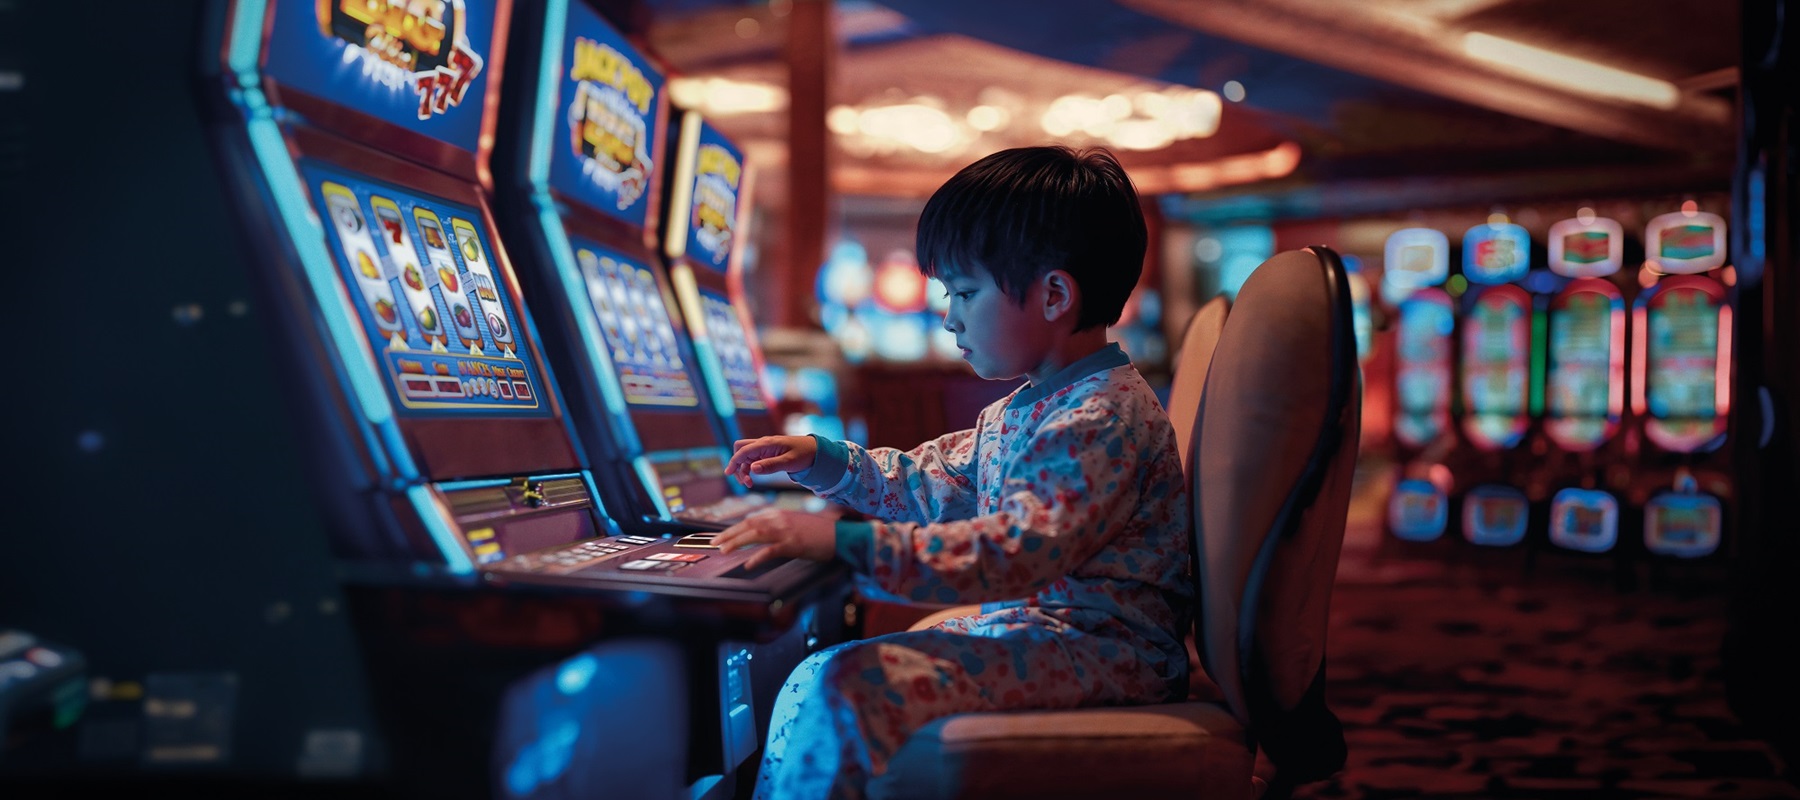 Vivo campaign spotlights dangers of online gaming for children